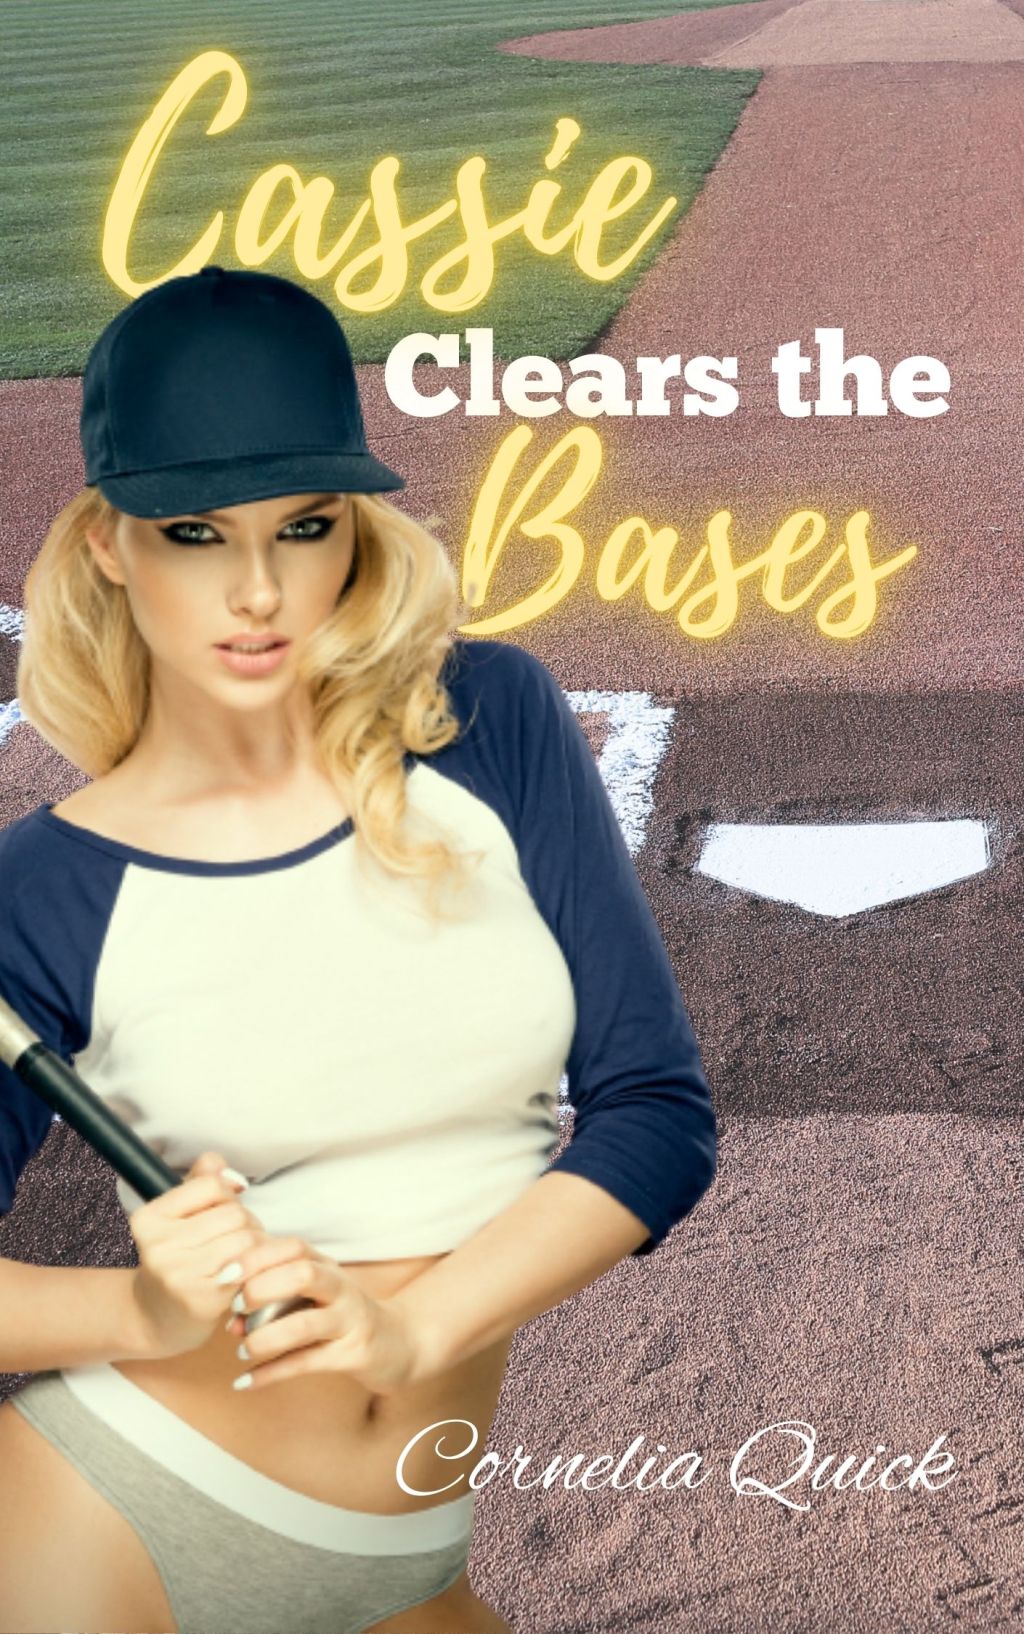 Betwixtmas Binge: Cassie Clears the Bases